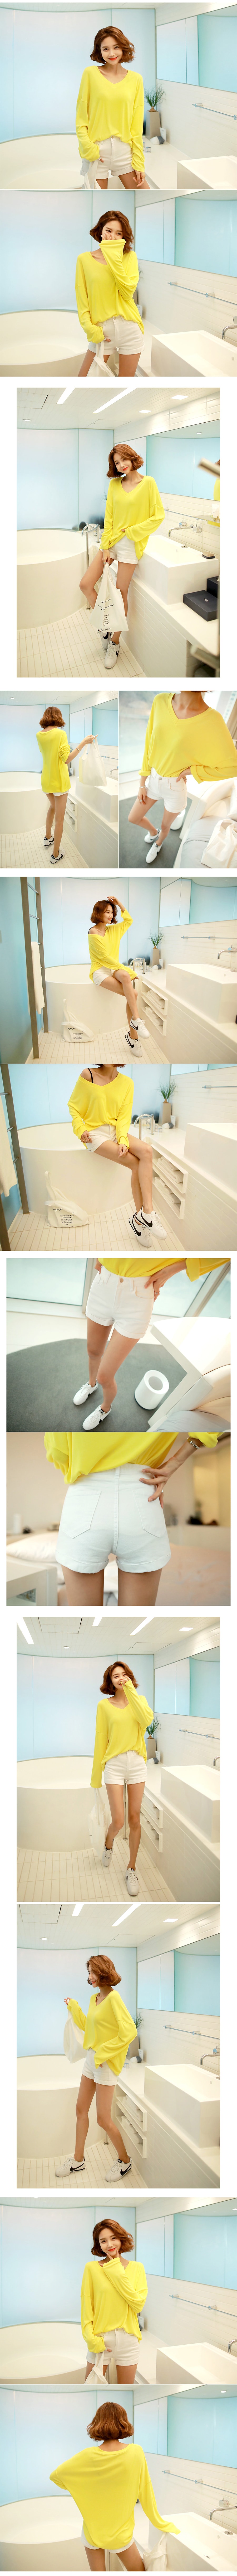 KOREA High Waist Denim Shorts #White M(27-28) [Free Shipping]